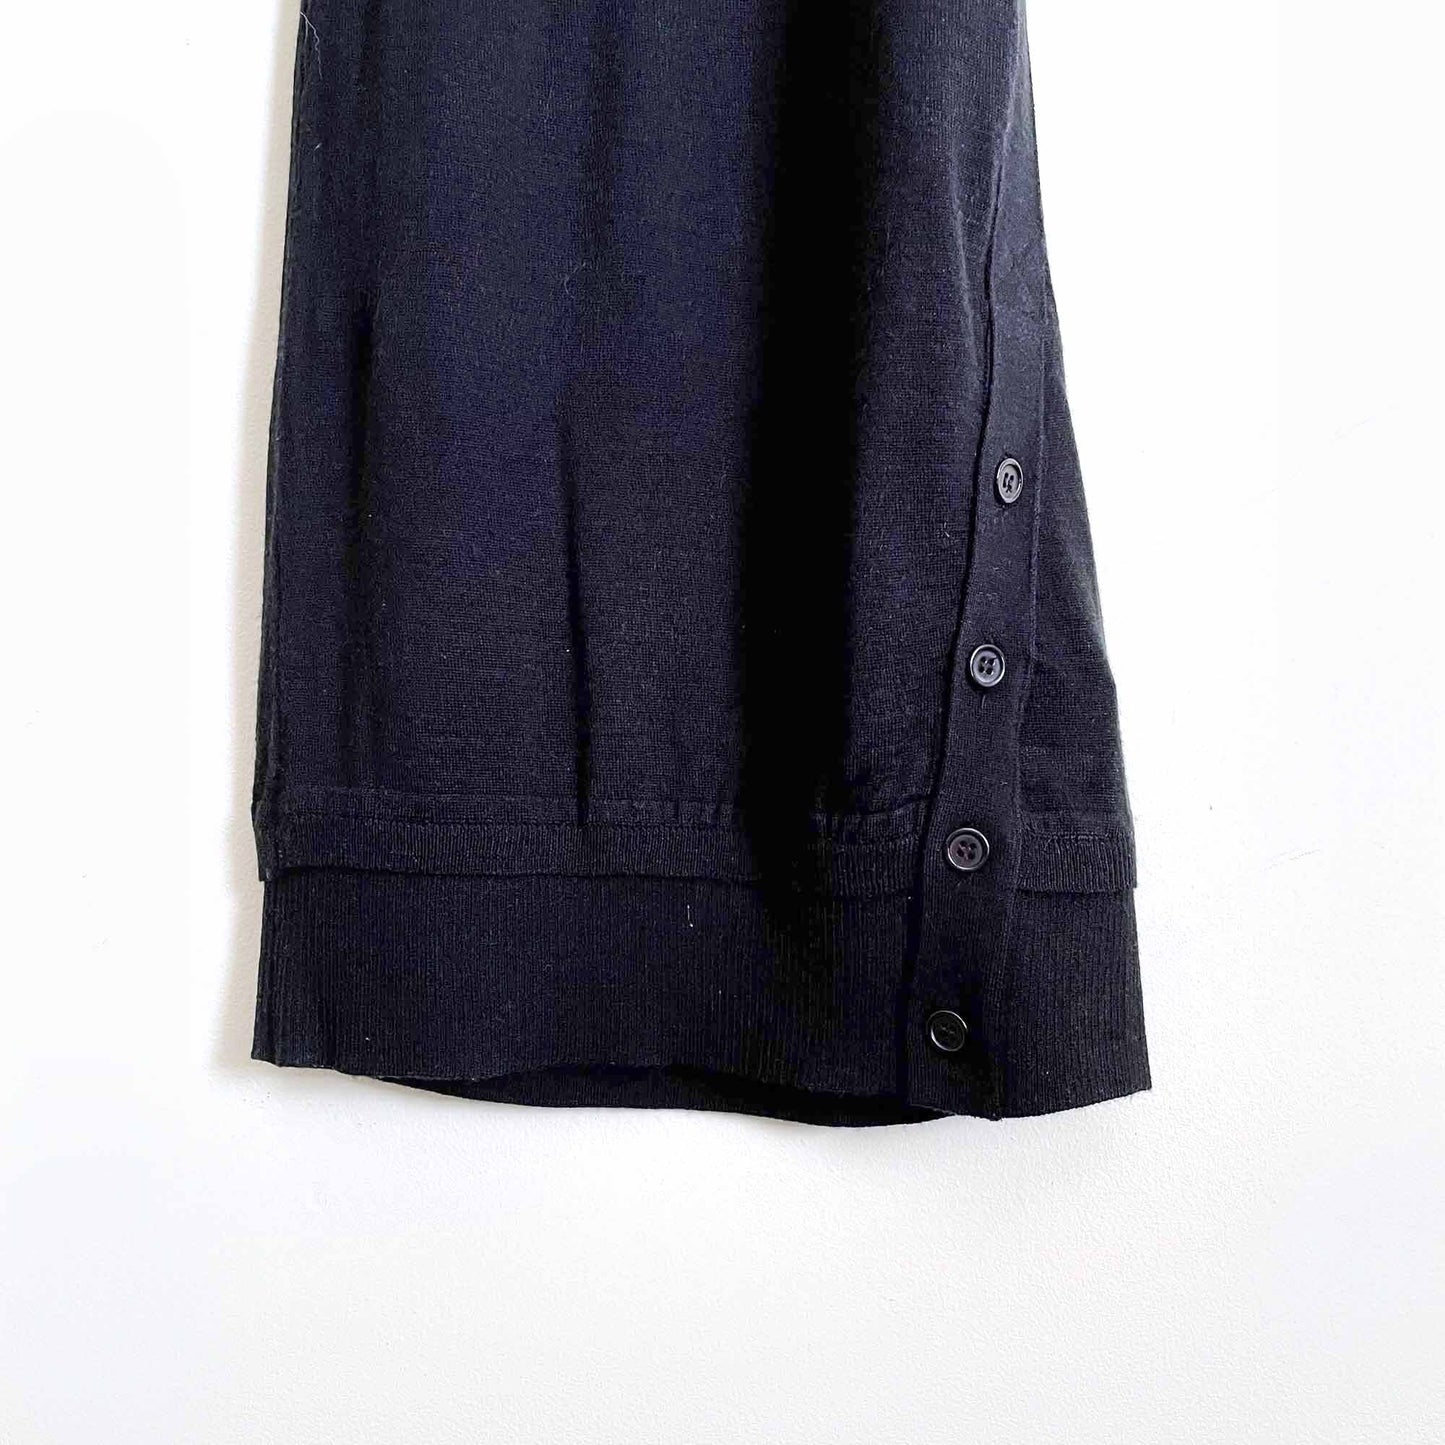 Alexander Wang wool-blend knit tank dress - size Small